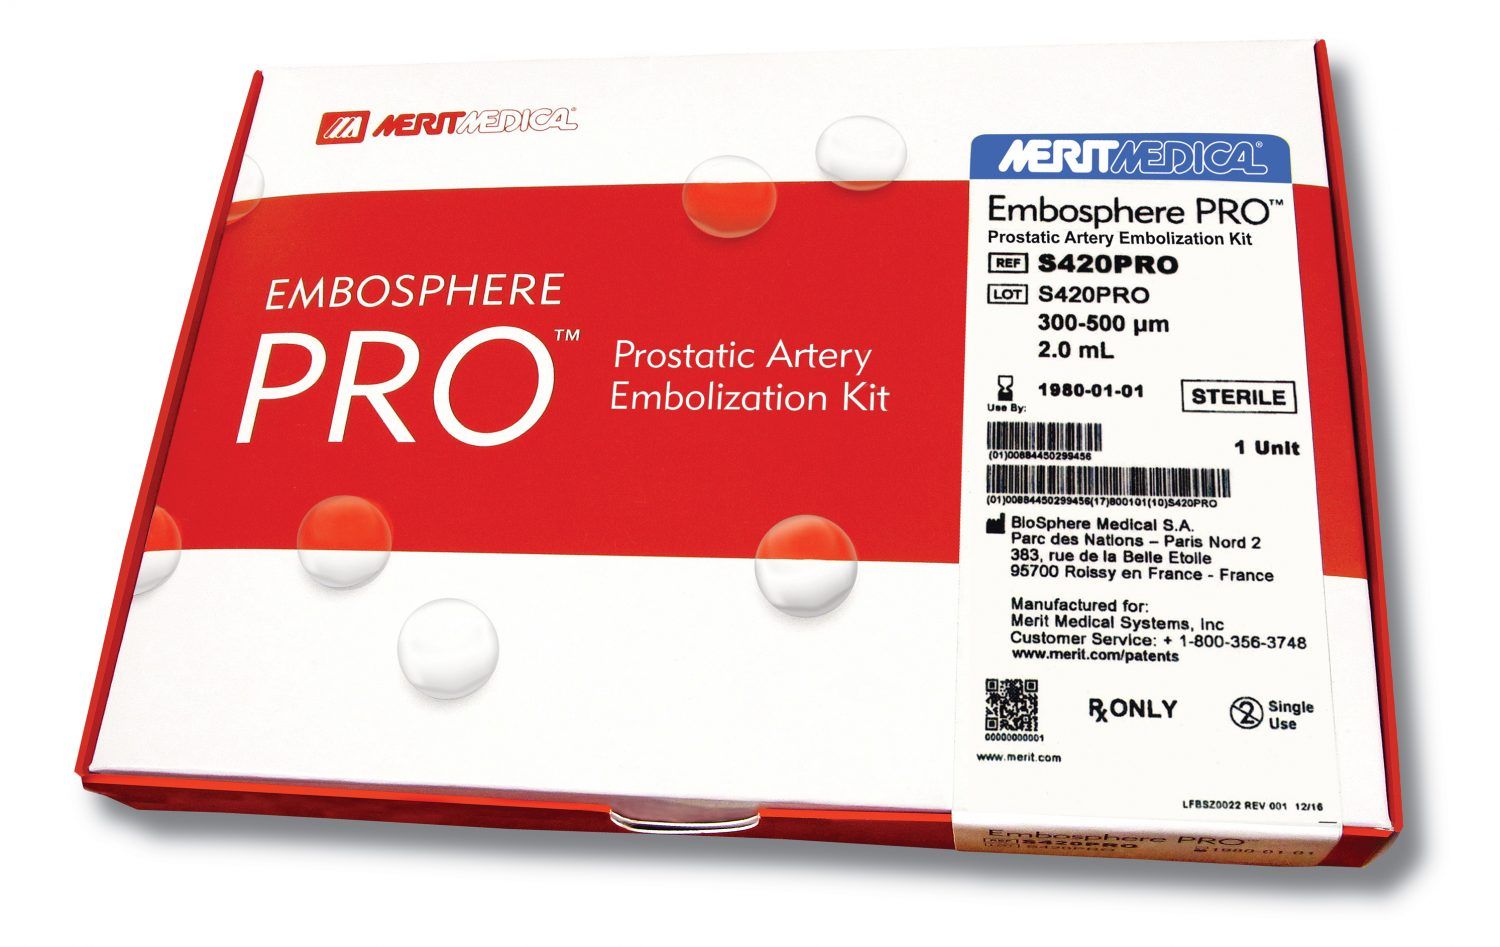 Embosphere PRO™ Prostatic Artery Embolization Kit